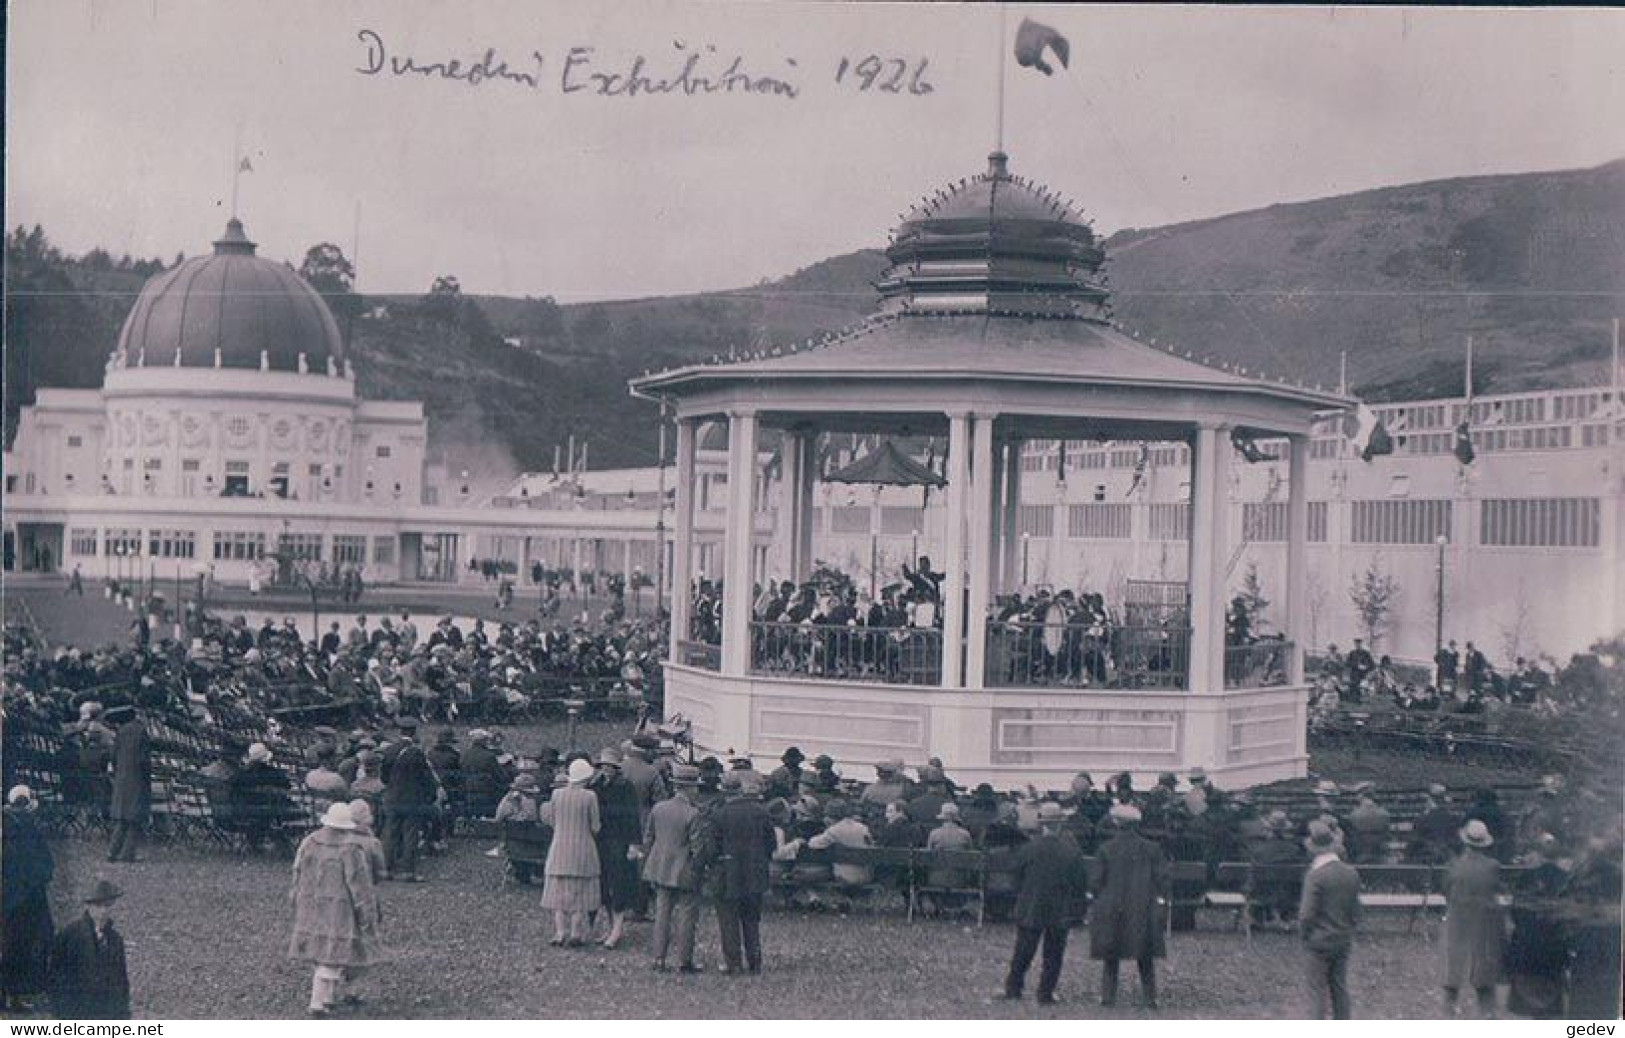 Nouvelle-Zélande Dunedin, Exhibition 1926 (1926) - Neuseeland